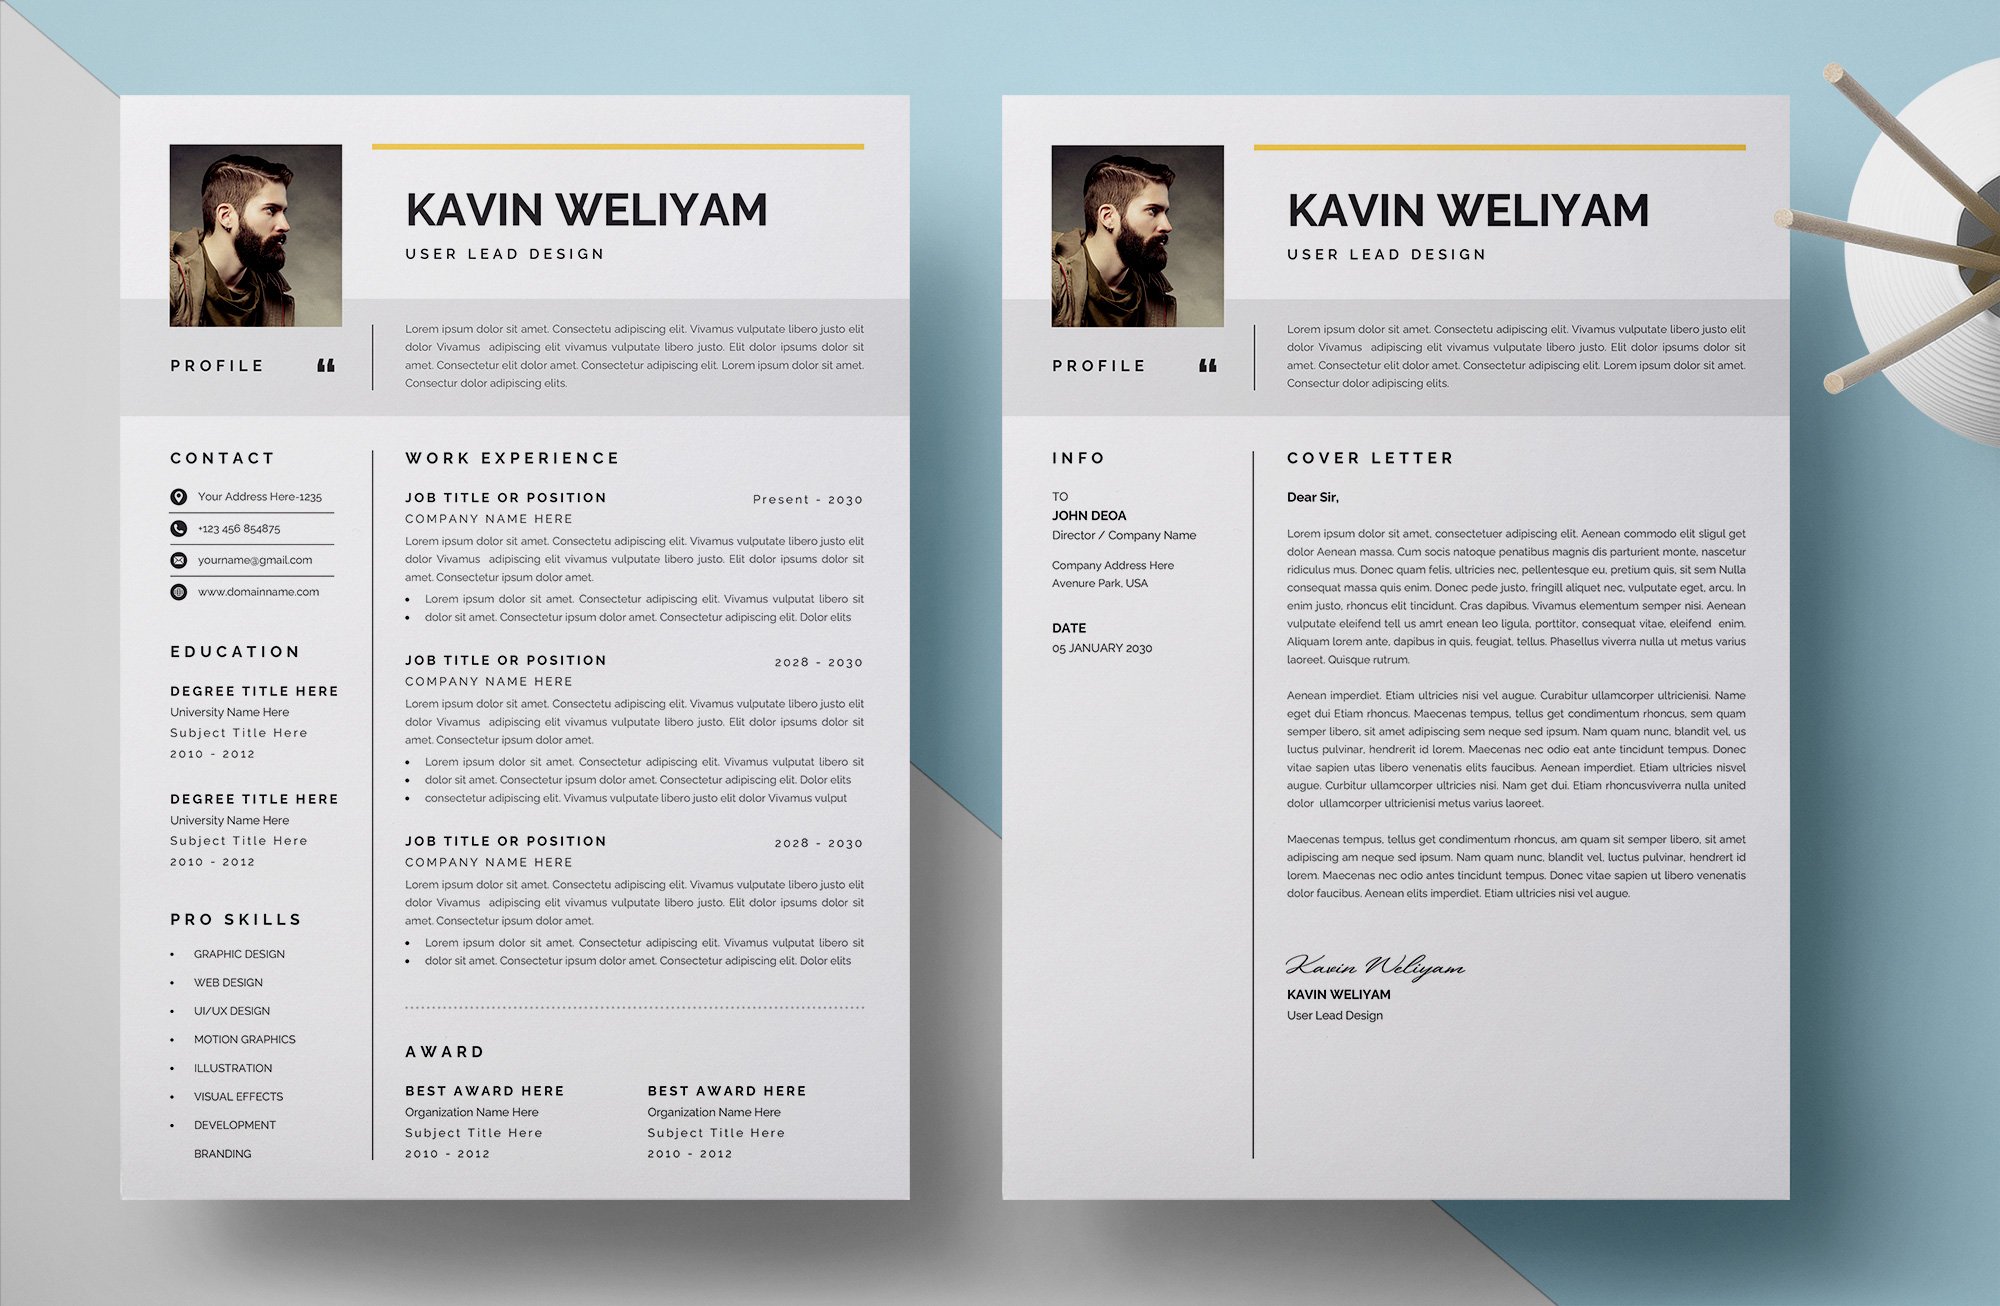 Resume / CV preview image.